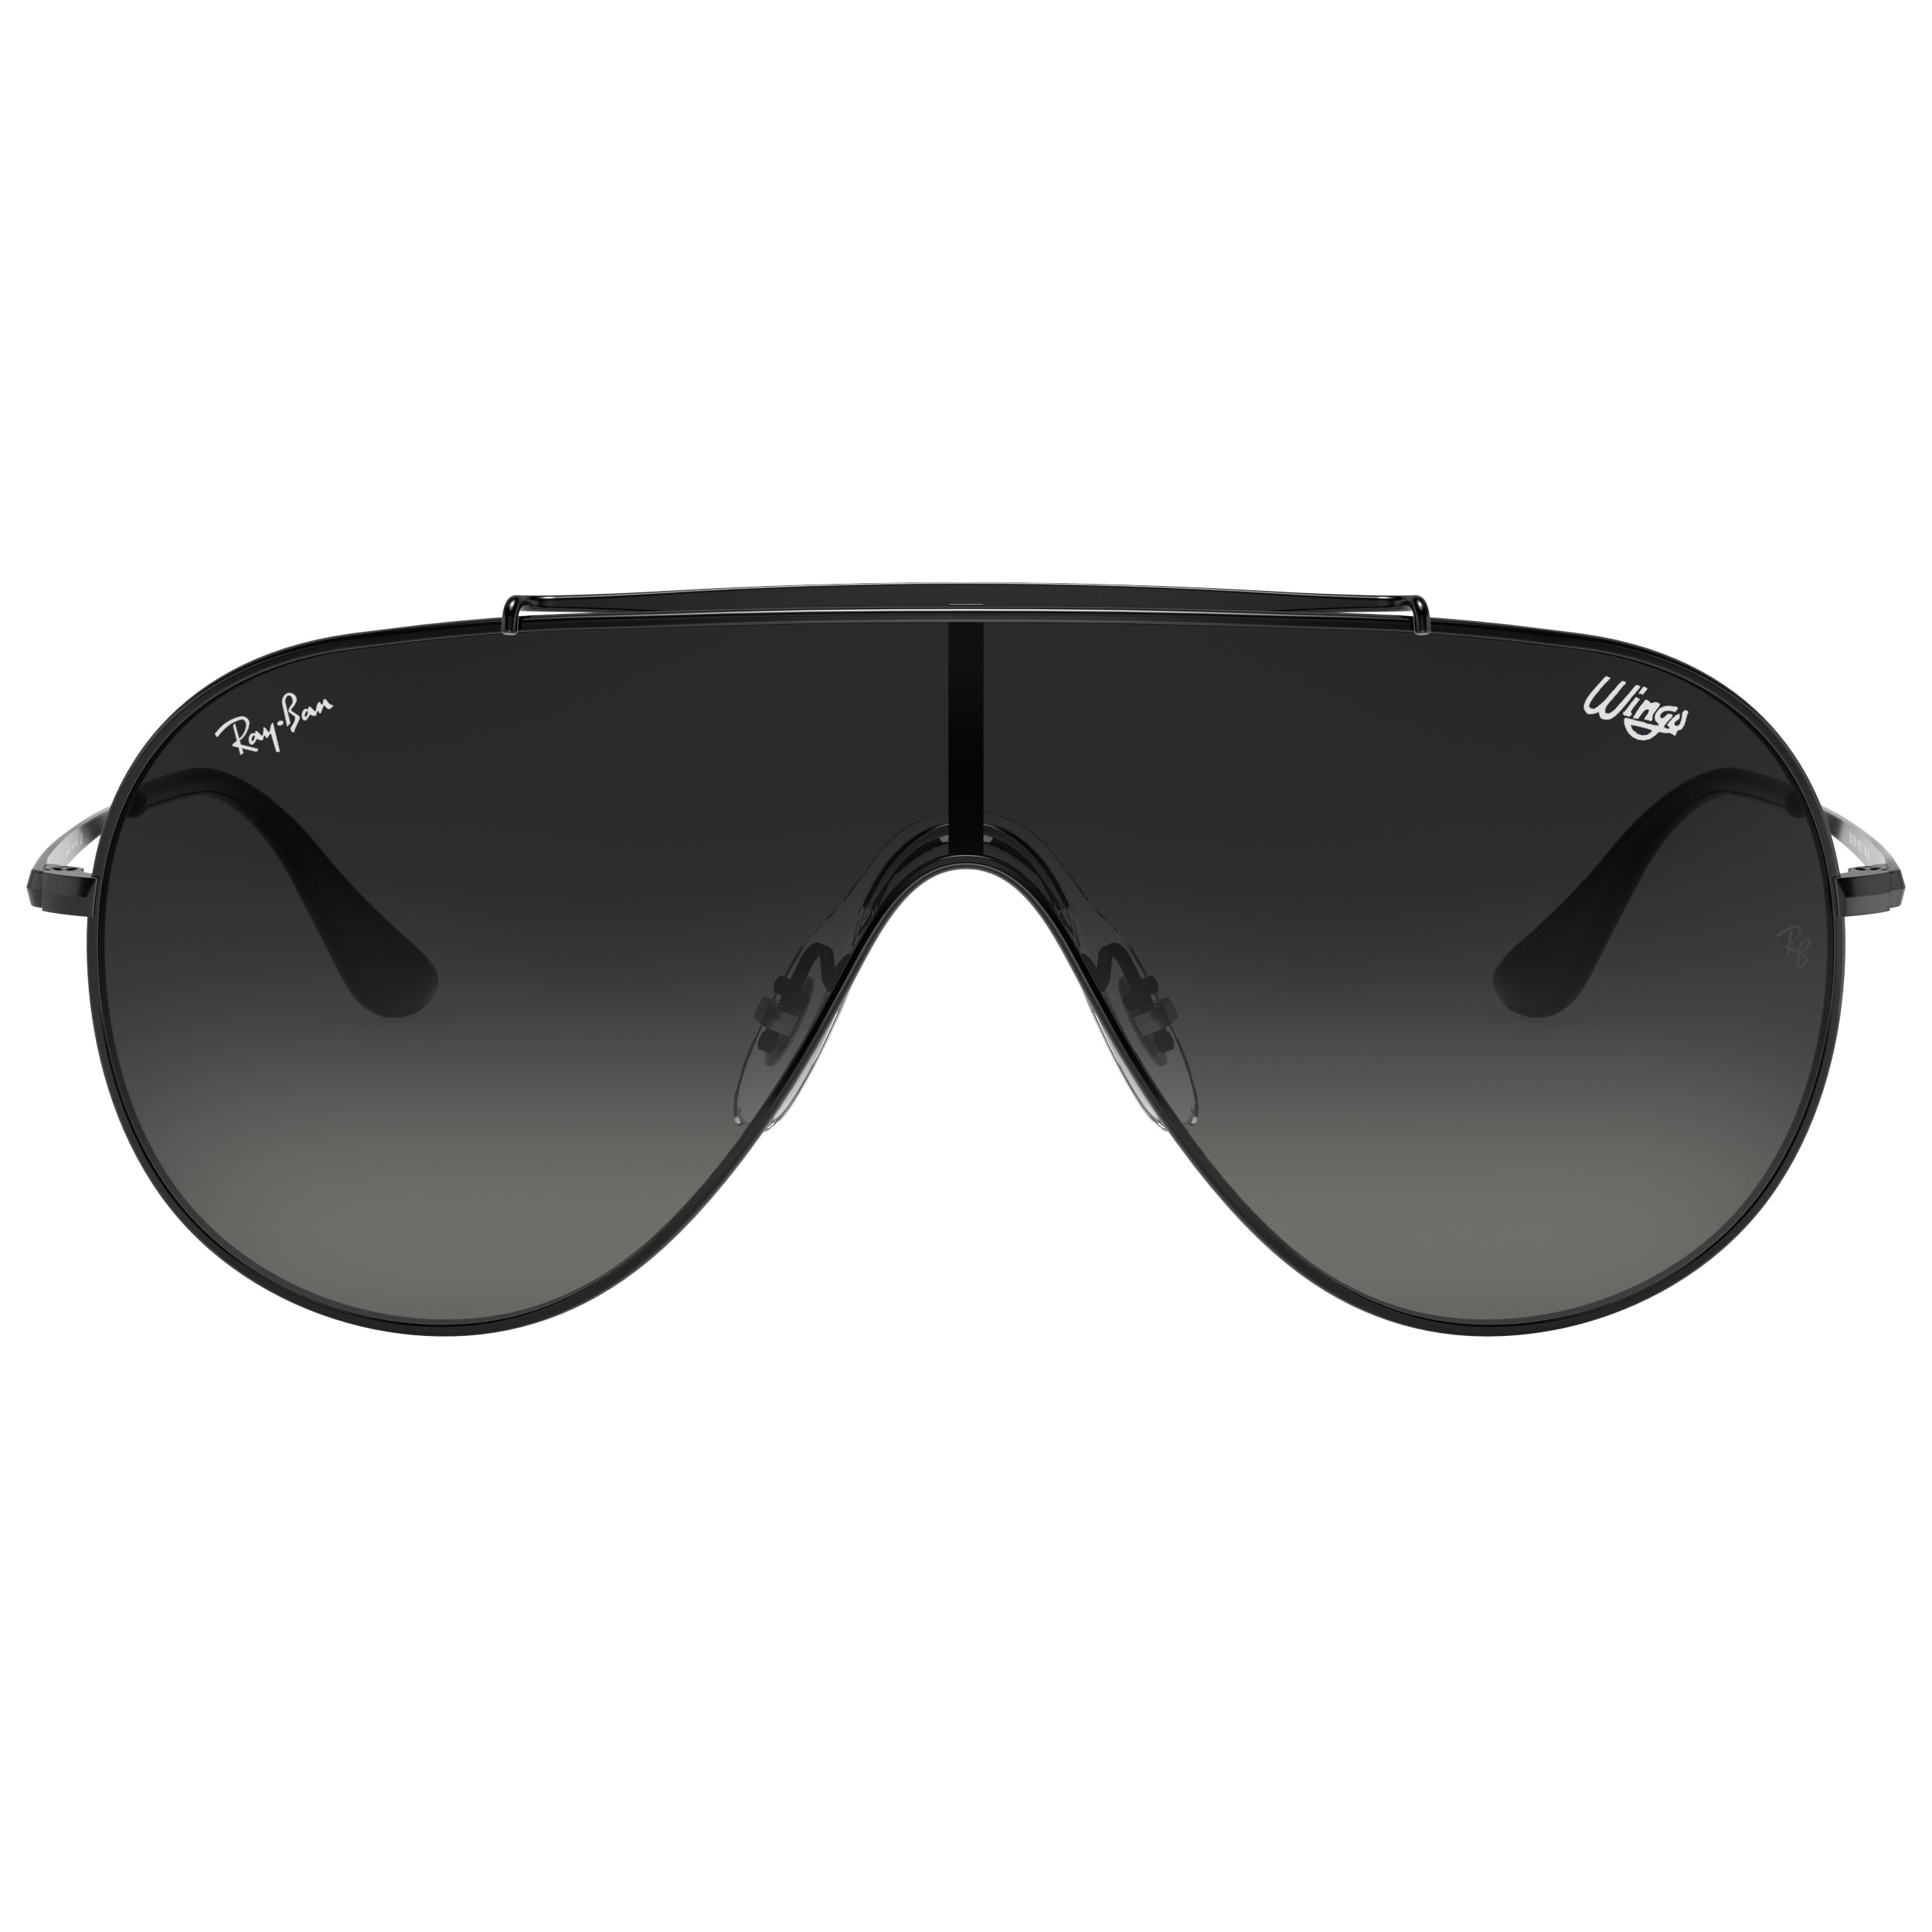 Ray-Ban Wings Grey Gradient Pilot Unisex Sunglasses RB3597 002/11 33